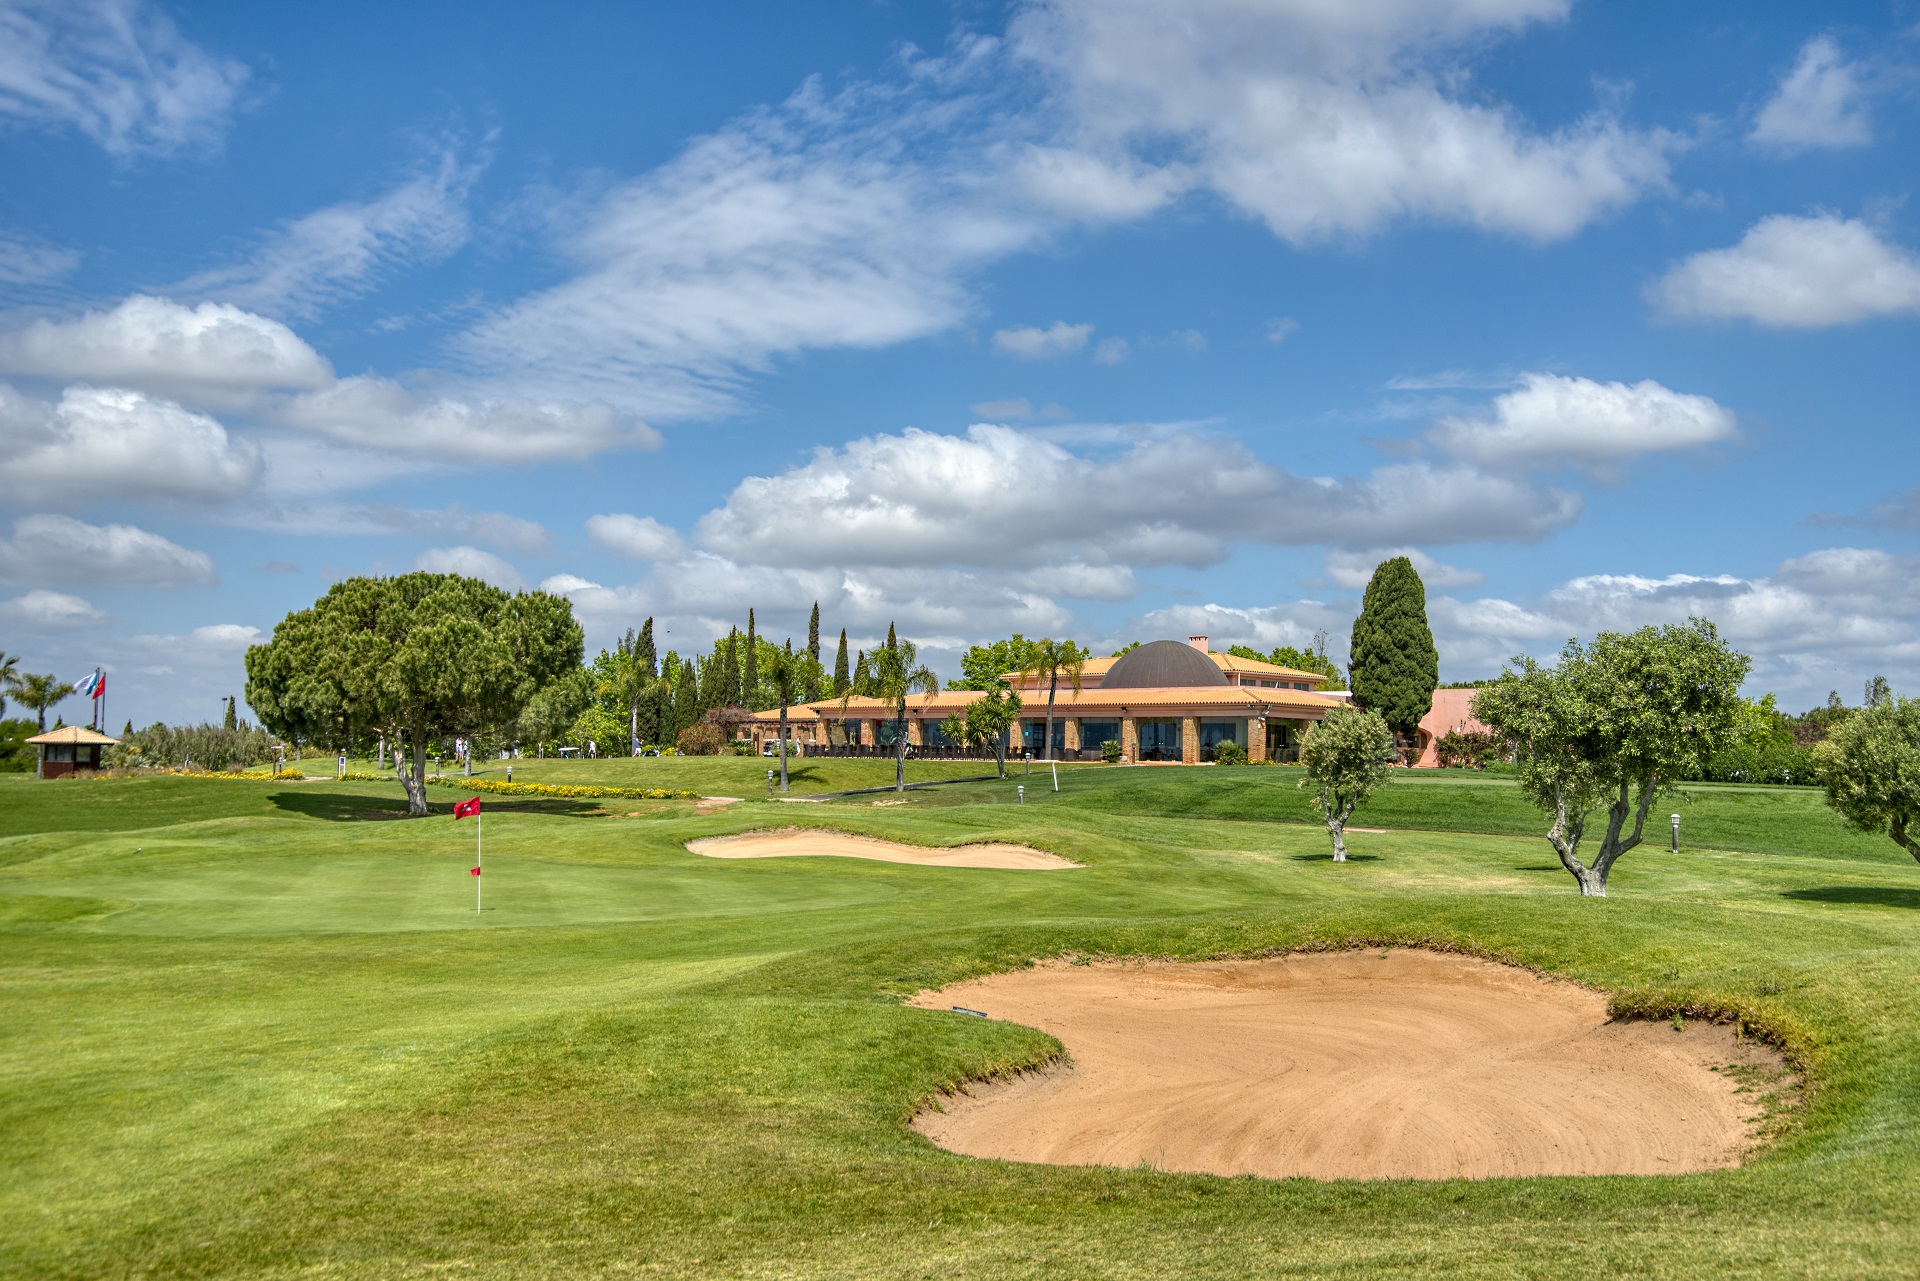 Dom Pedro Millennium | Golf i Vilamoura, Algarve